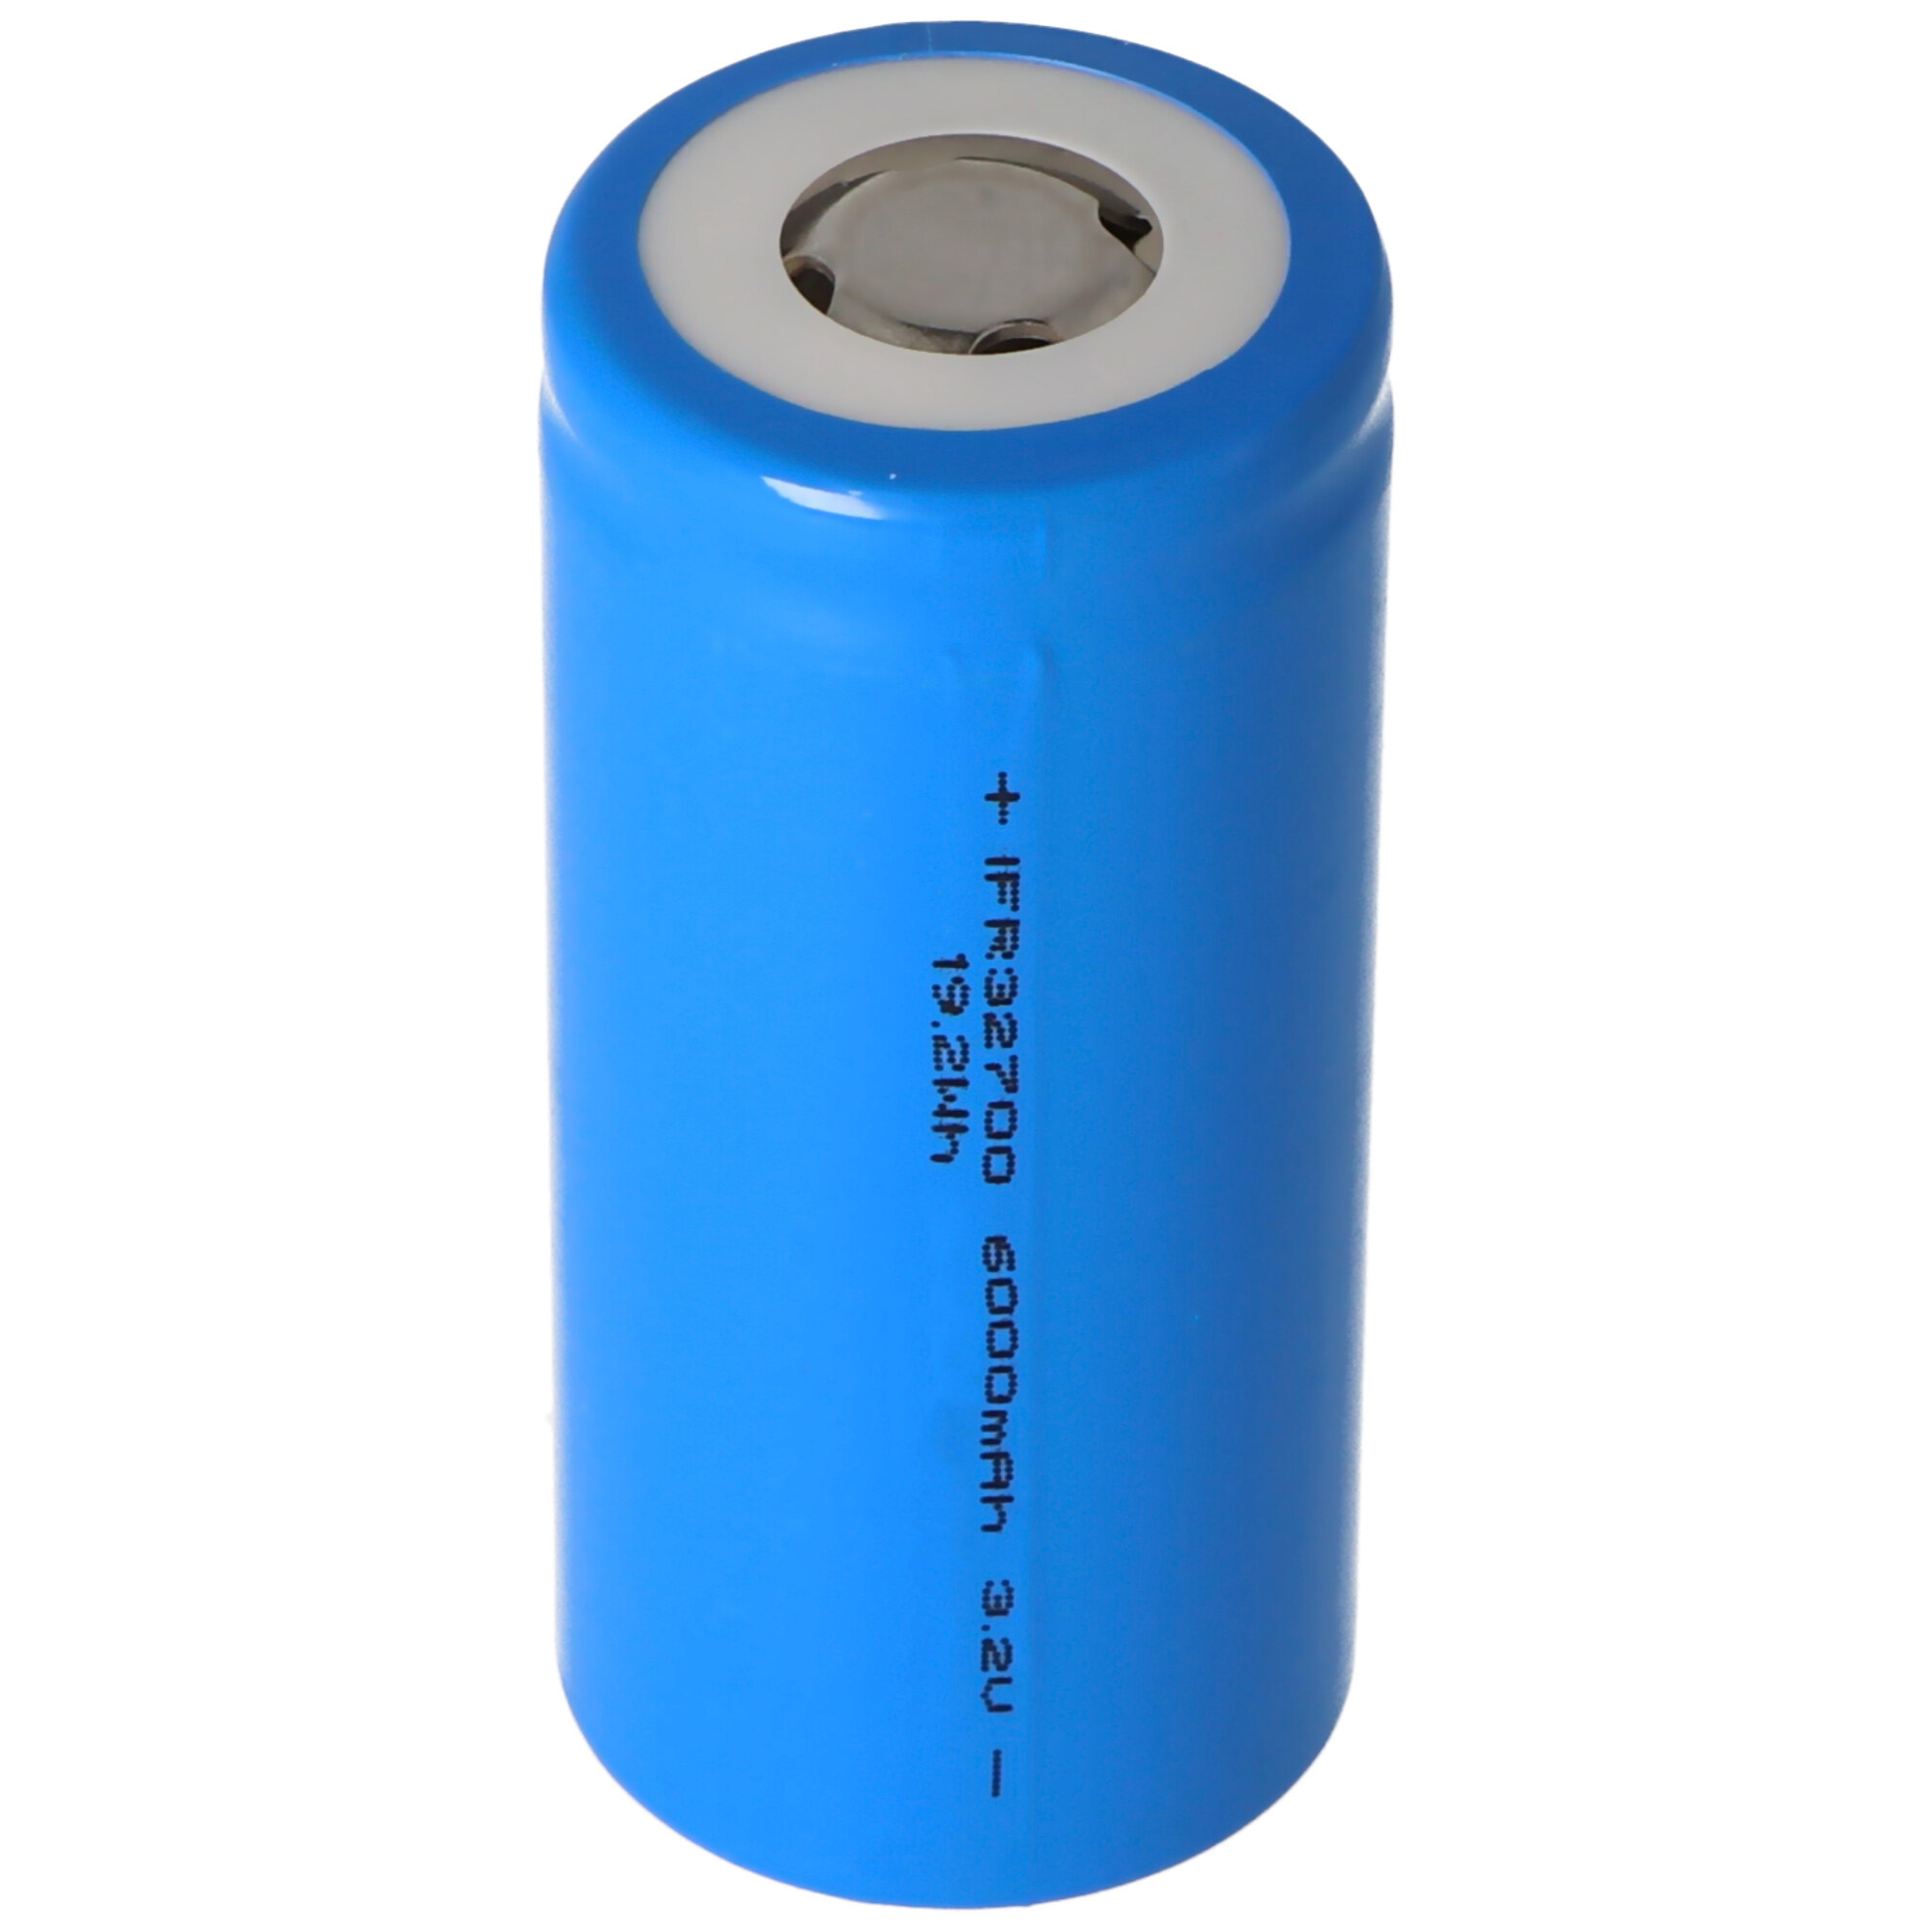 IFR32600 Batterie LiFePO4 (phosphate de fer de lithium) 3,3V - 3,3V 6000mAh, Batteries LiFePo4, Batteries